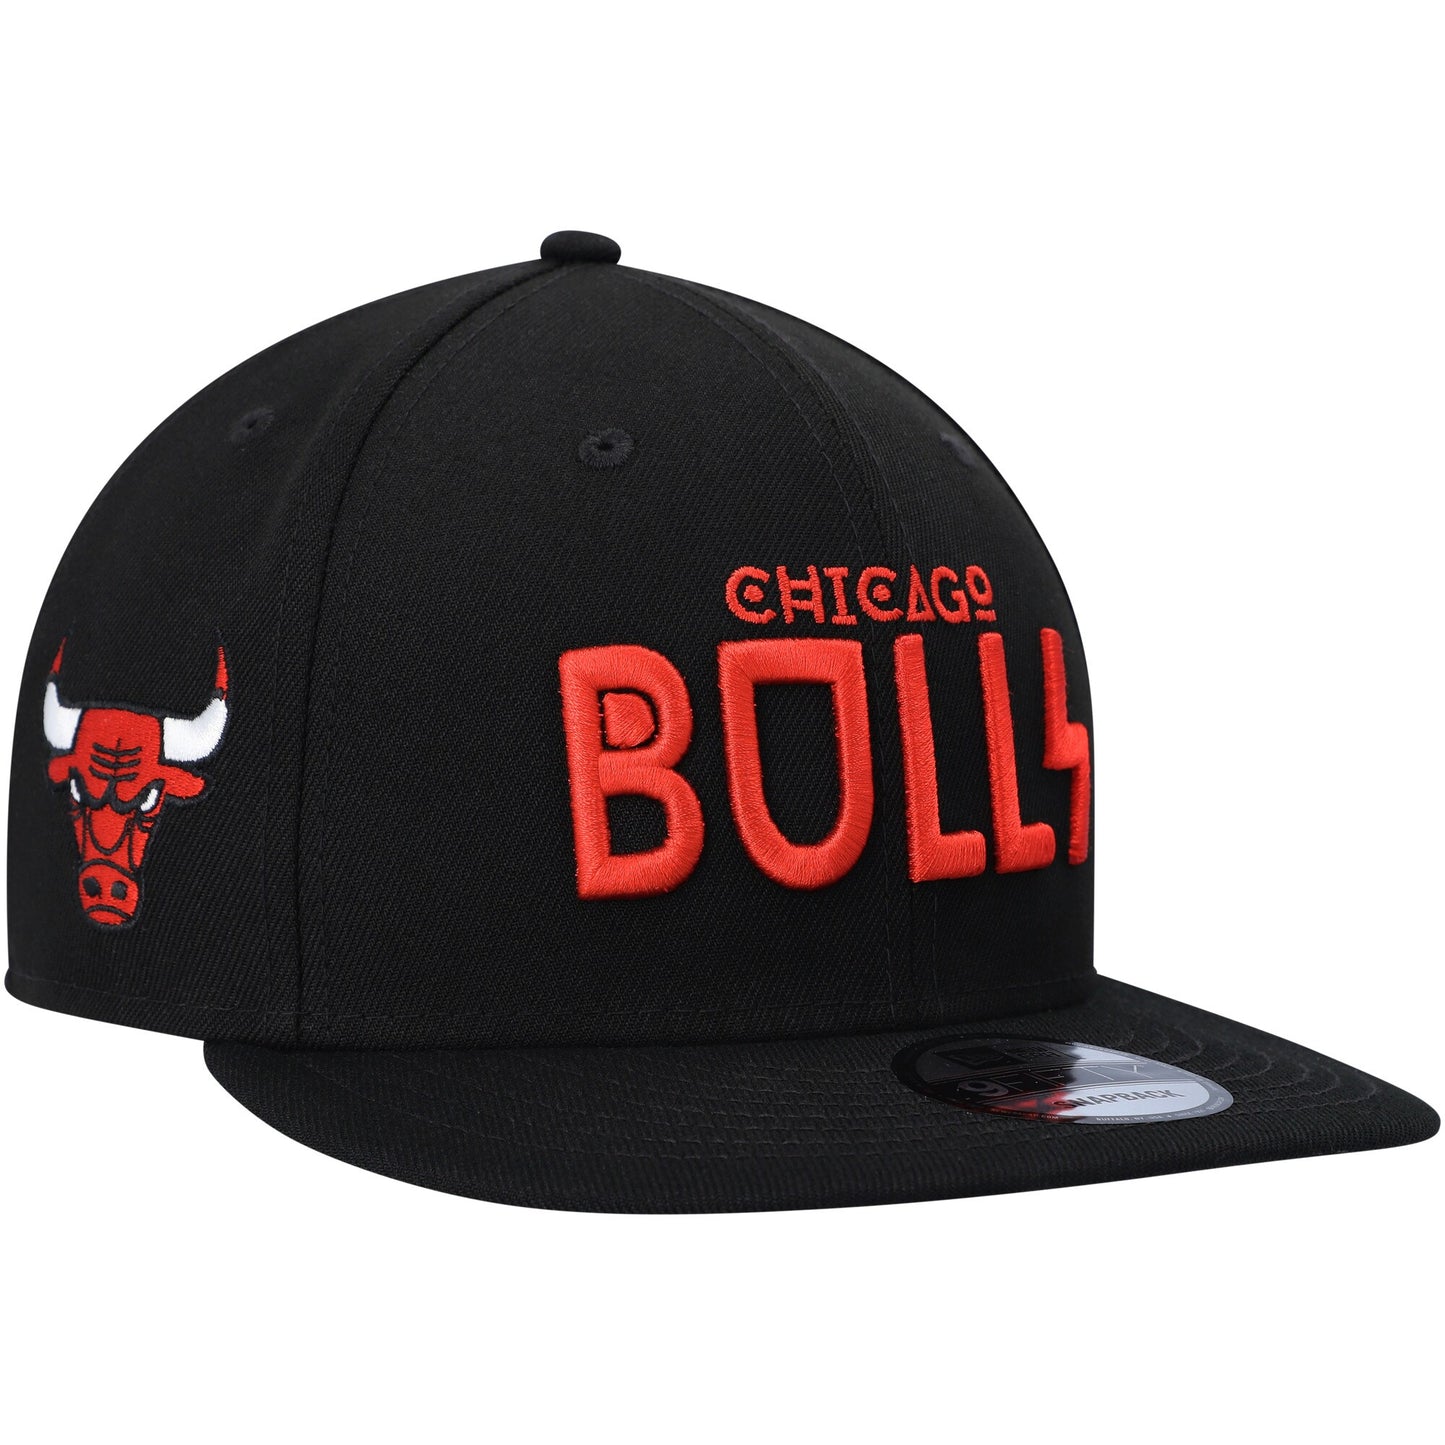 Chicago Bulls New Era Rocker 9FIFTY Snapback Hat - Black